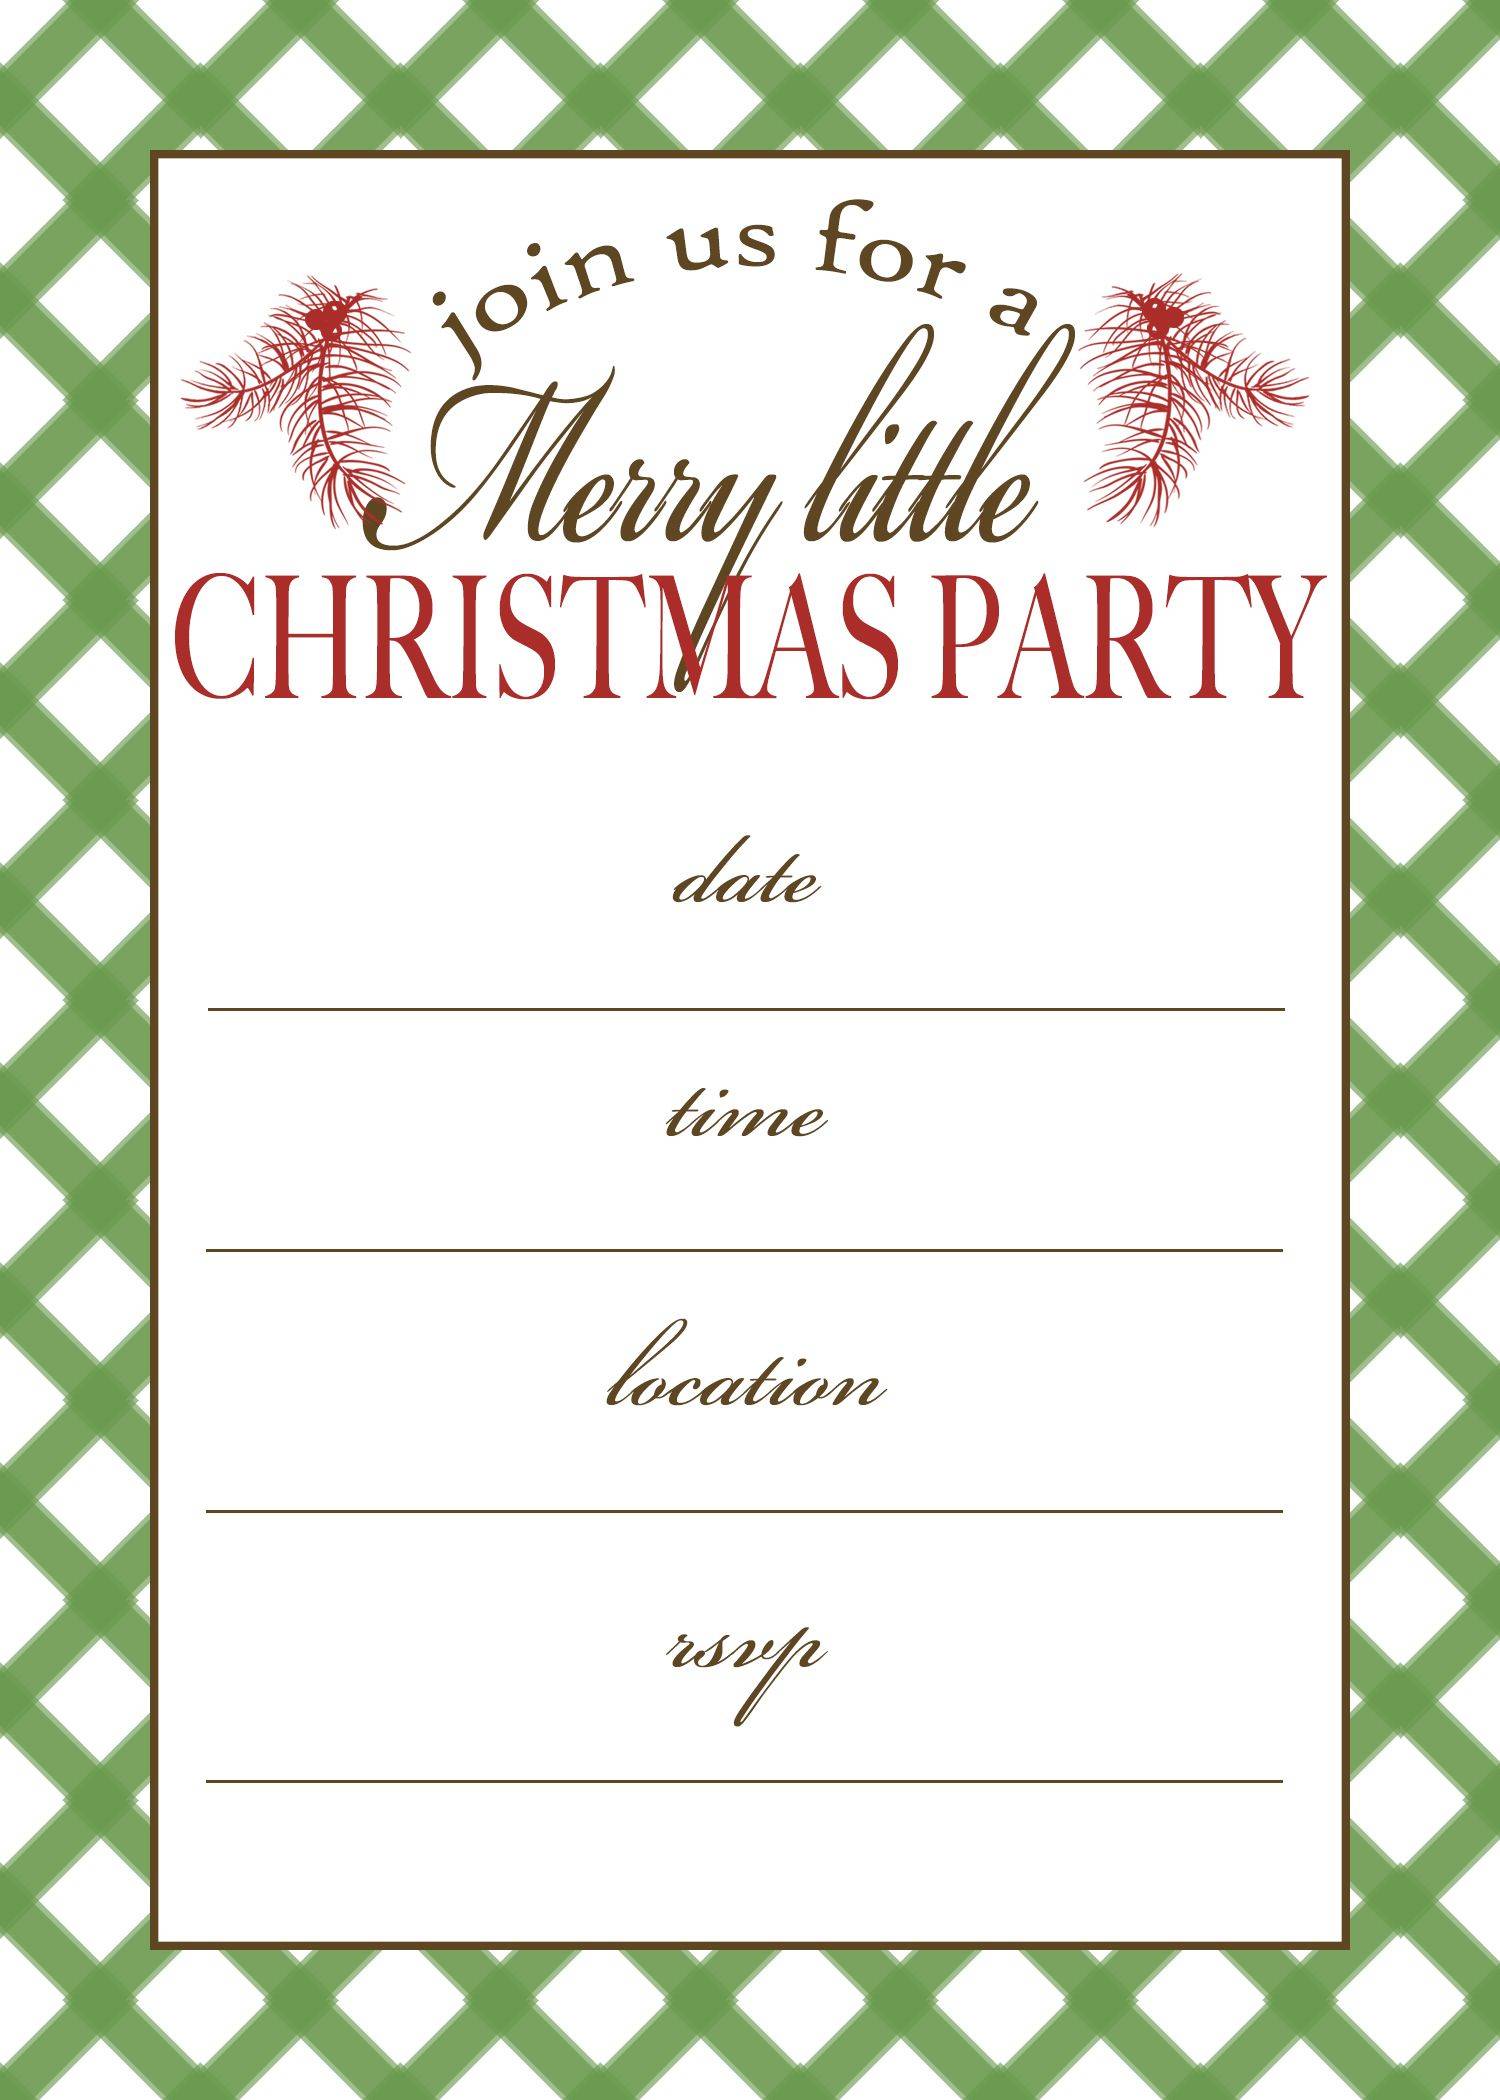 sample-christmas-card-invitation-letter-home-design